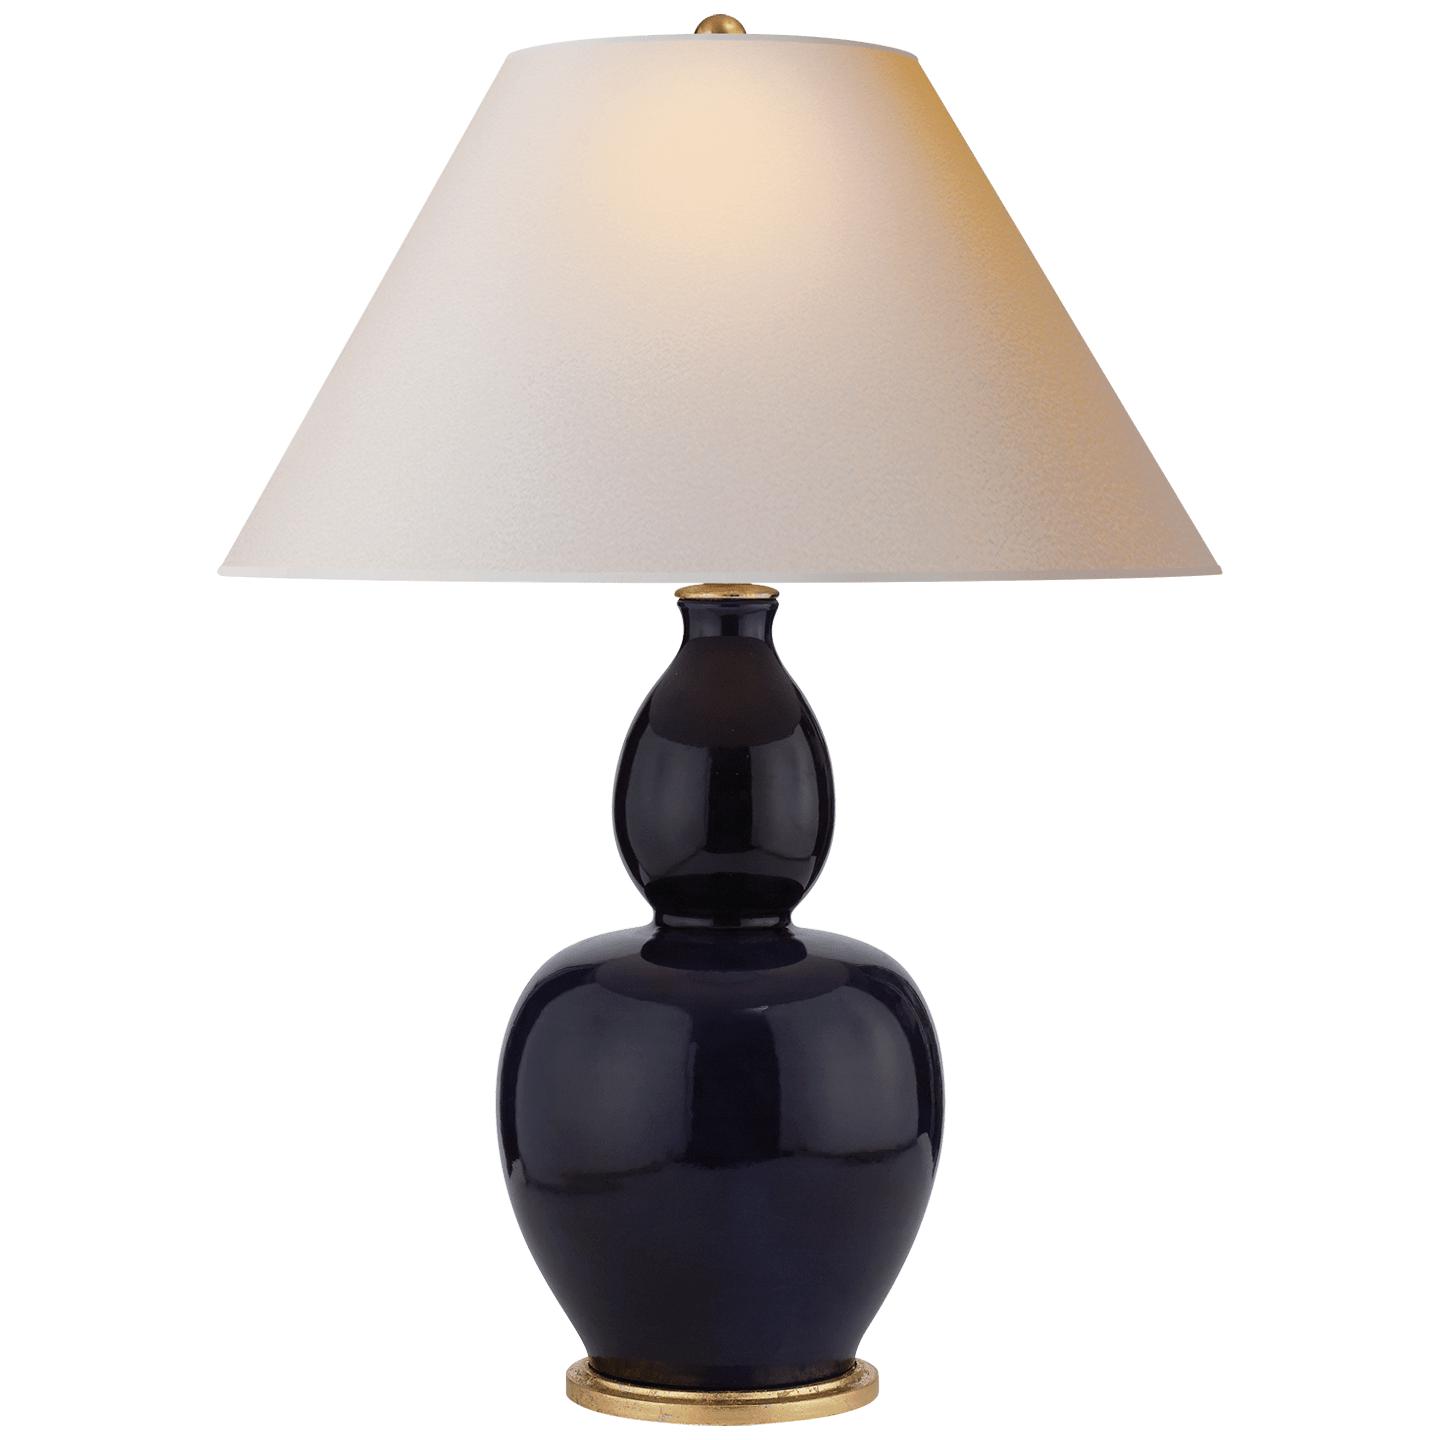 Купить Настольная лампа Yue Double Gourd Table Lamp в интернет-магазине roooms.ru